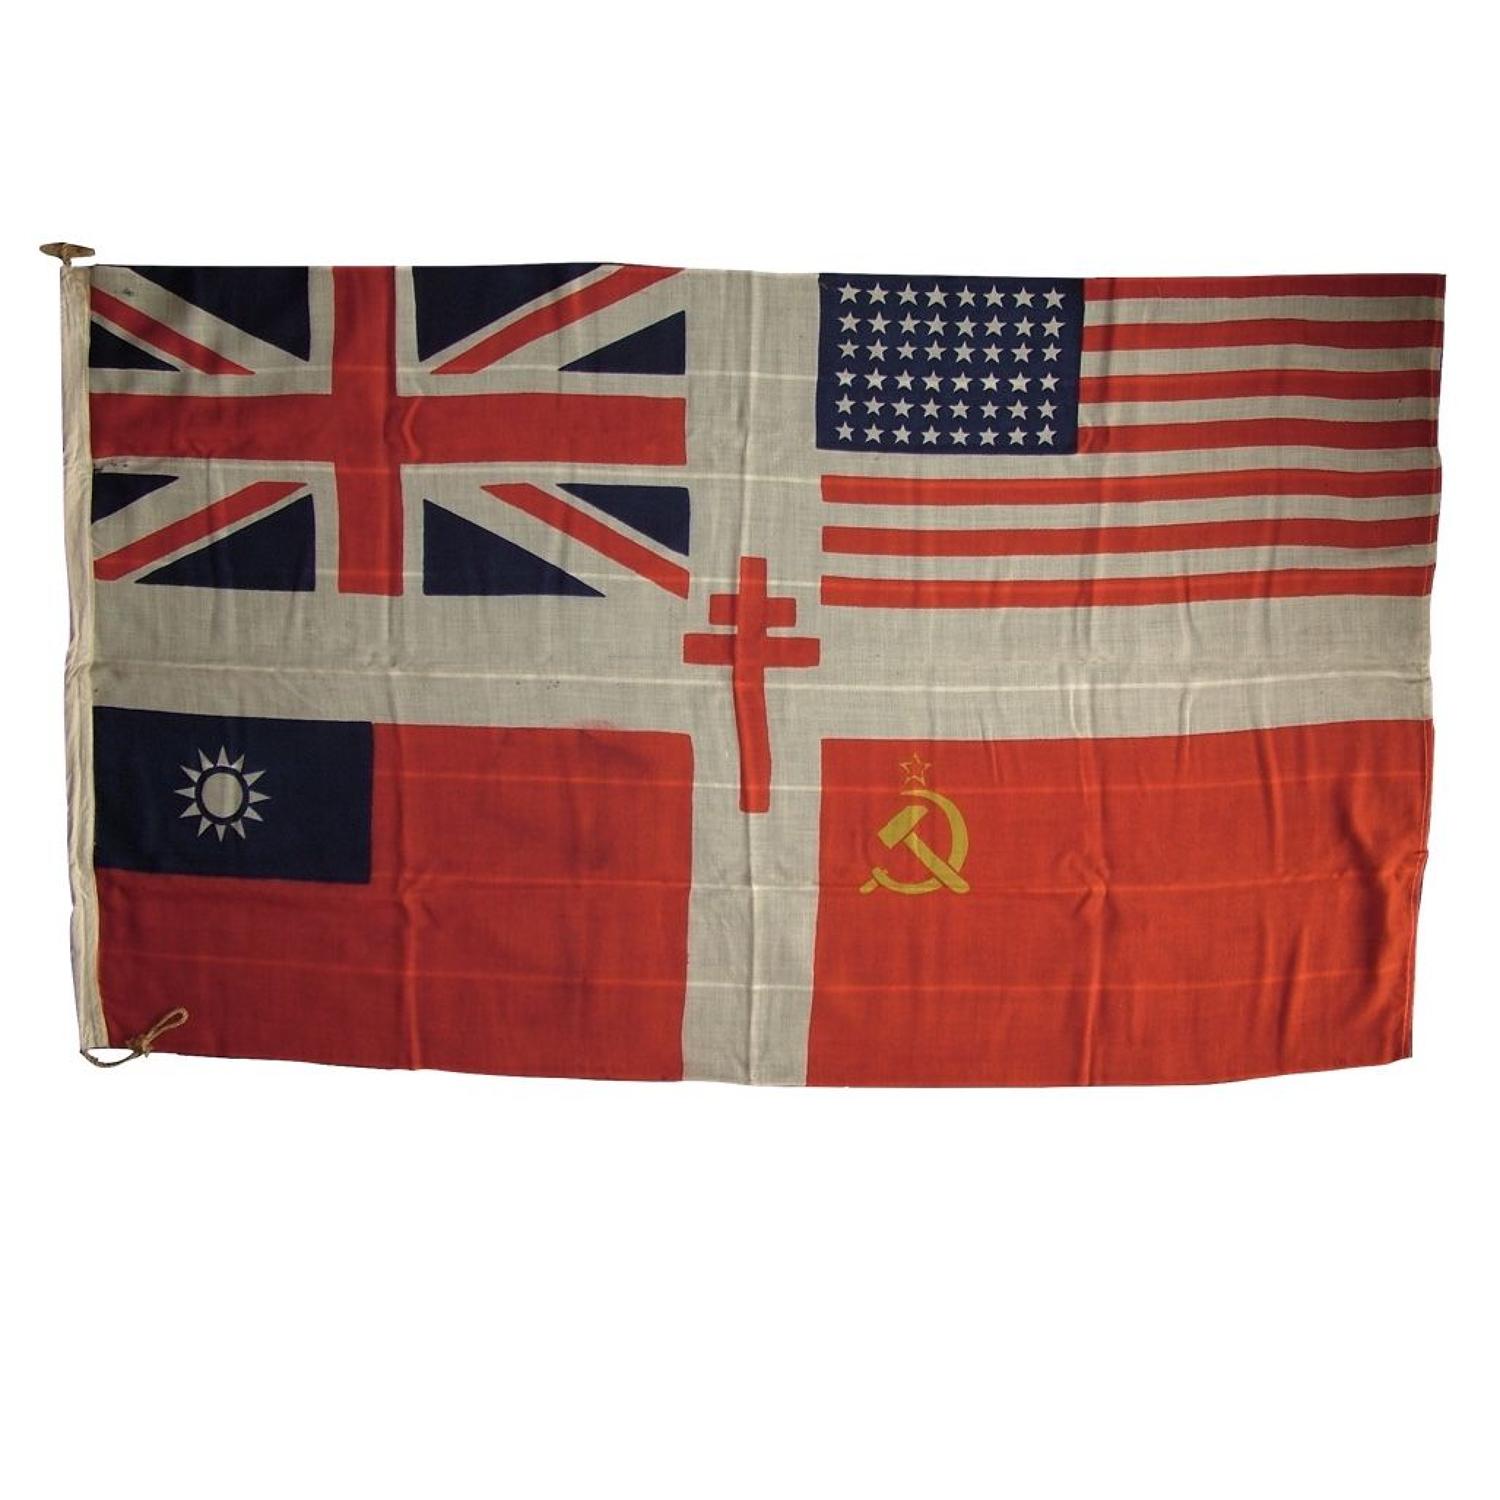 WW2 allied forces flag